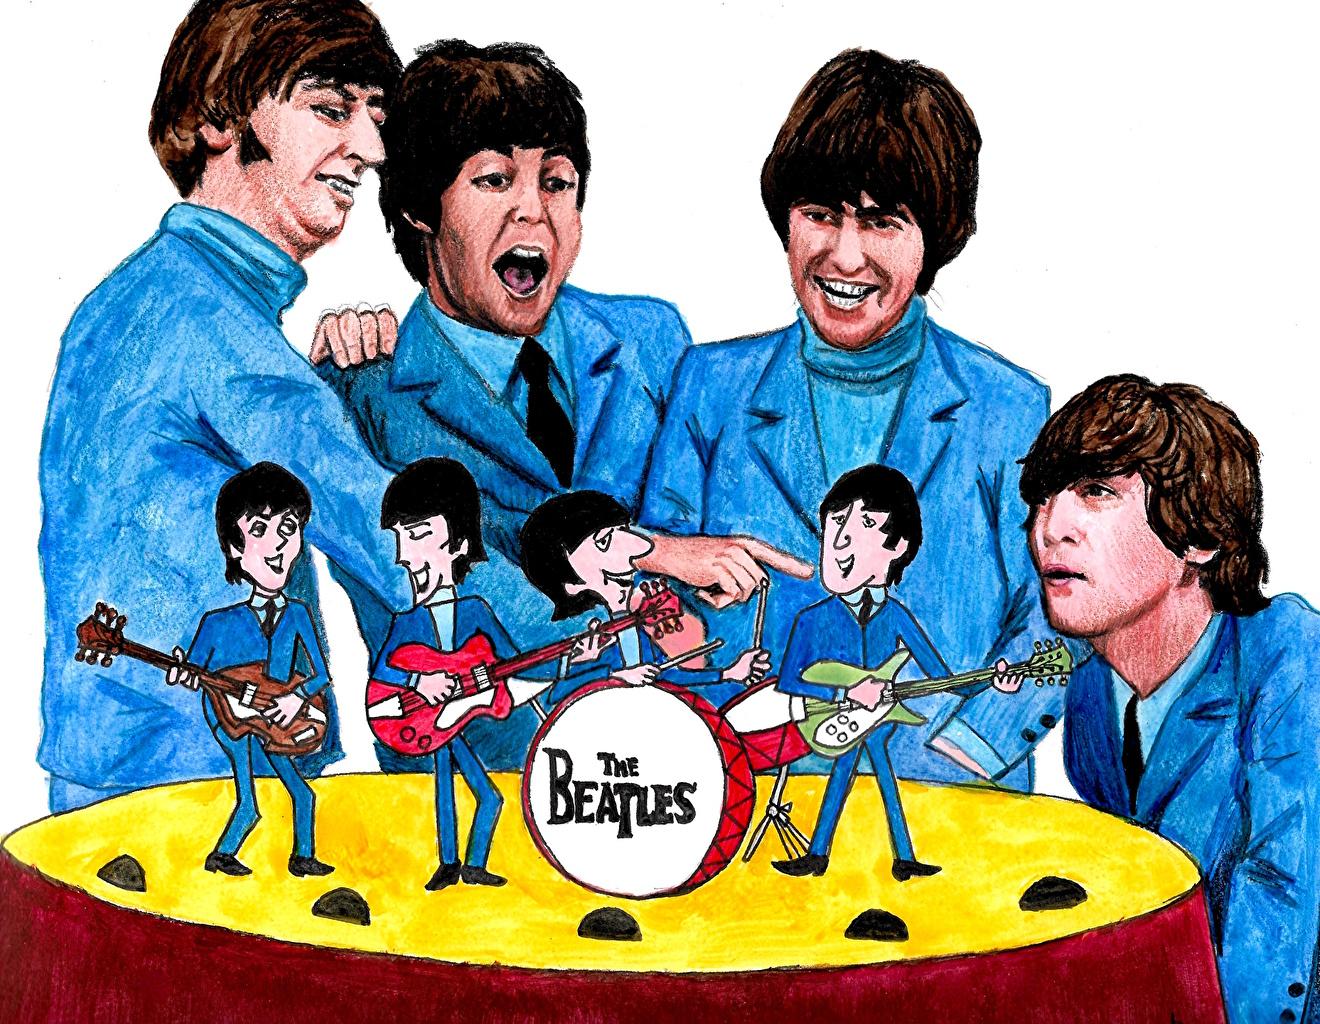 Picture John Lennon The Beatles Paul McCartney, George Harrison